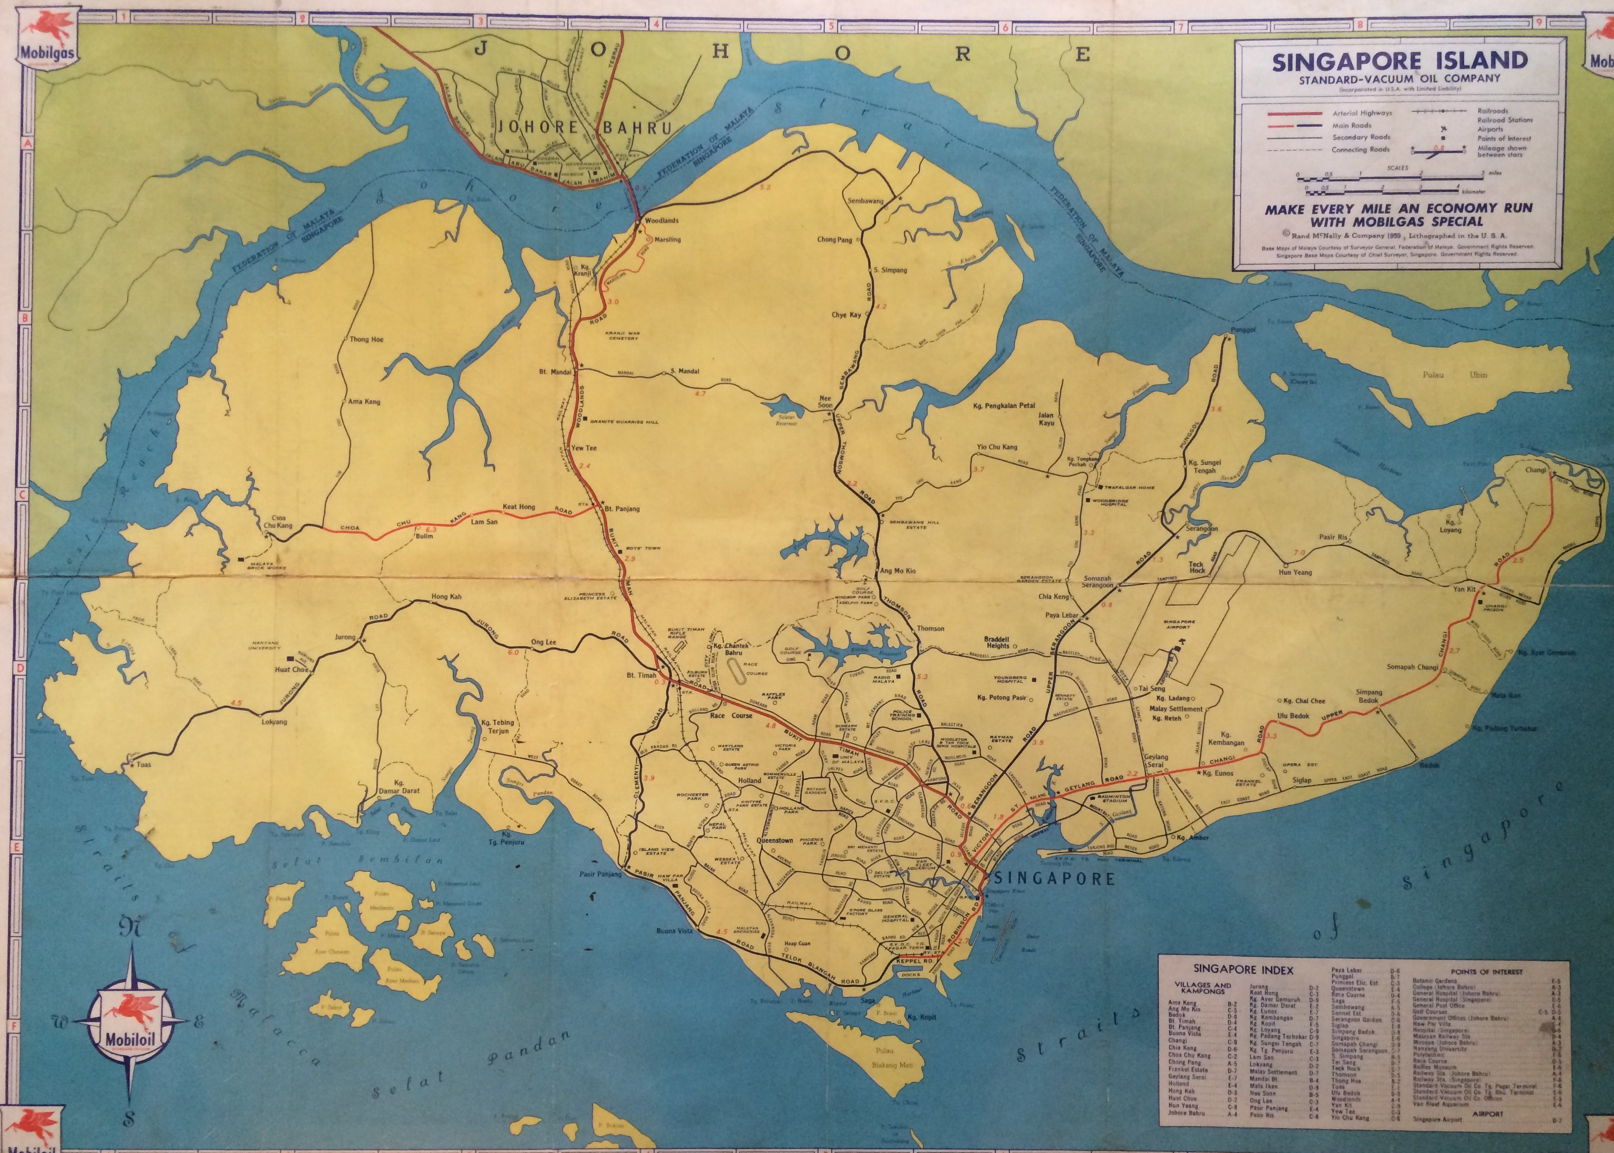 Singapore Road Map 1959 Mobil Oil